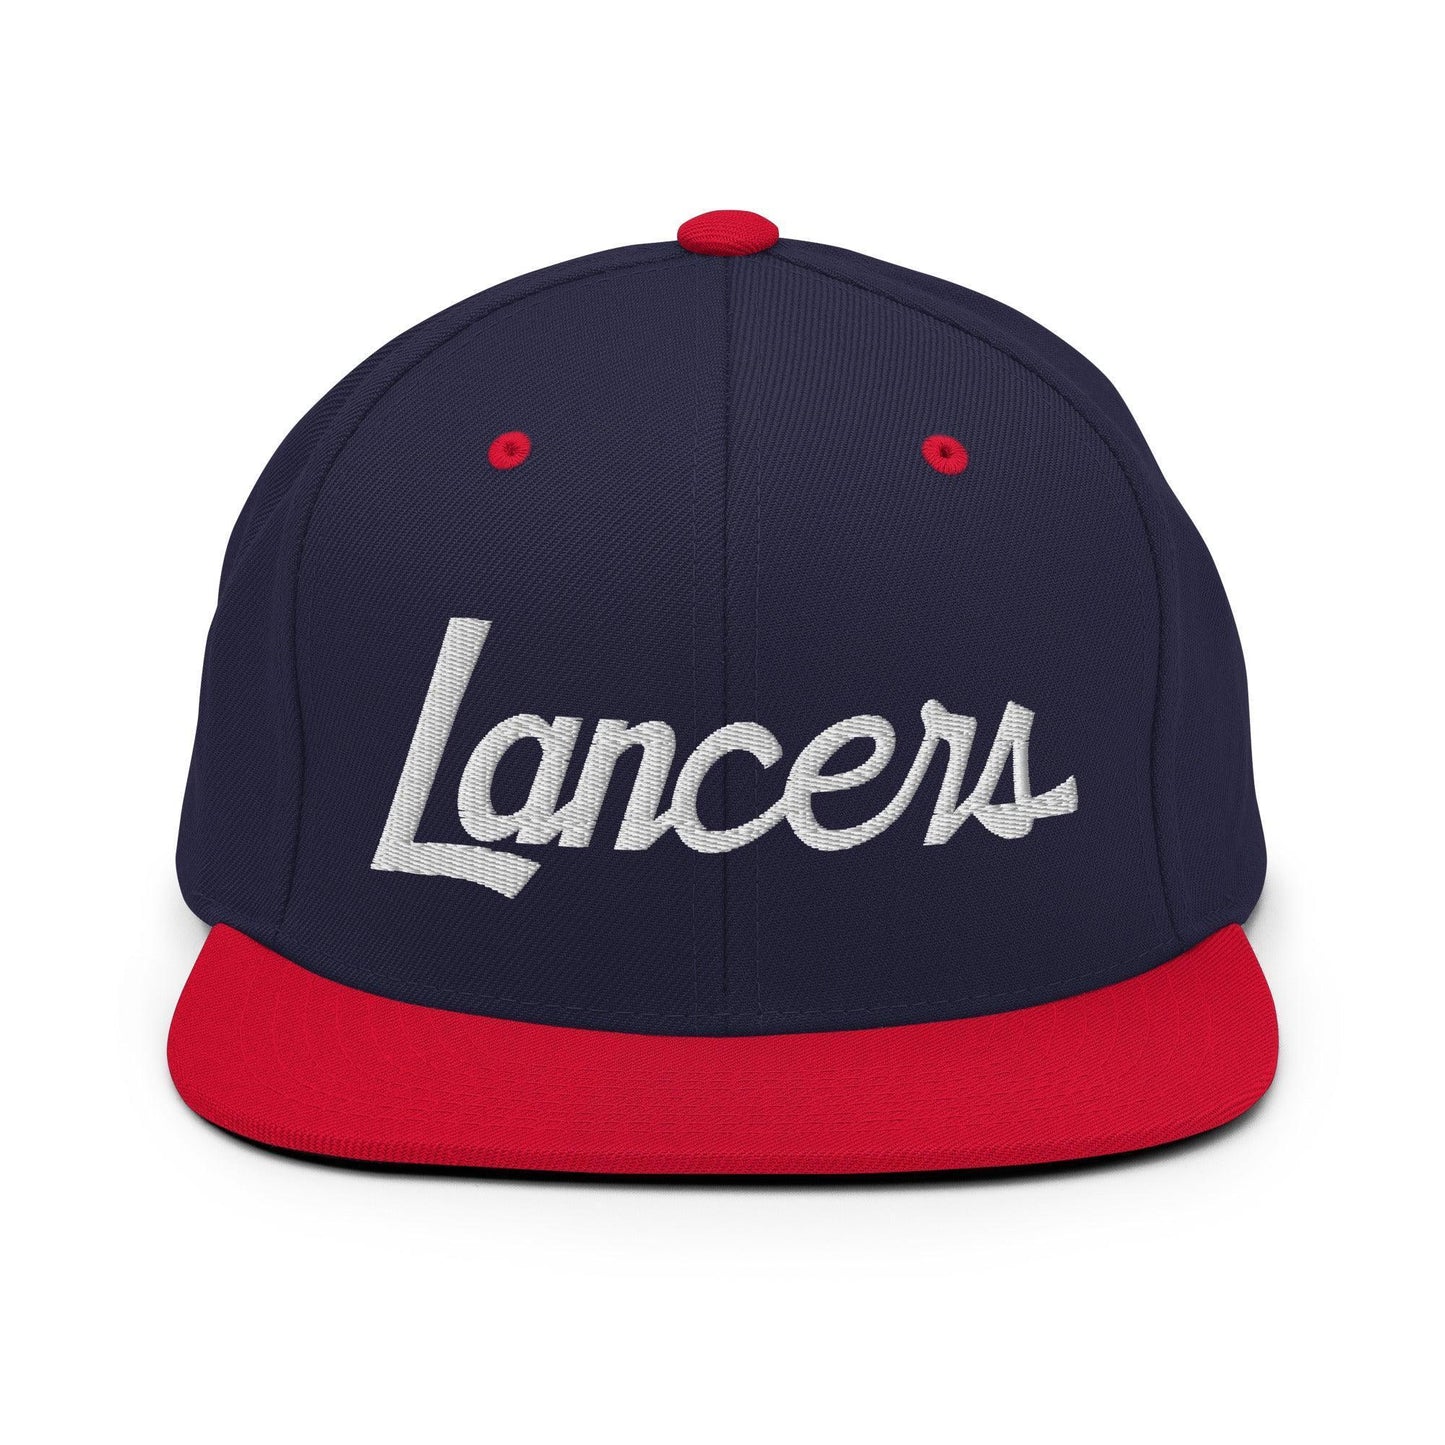 Lancers School Mascot Script Snapback Hat Navy/ Red